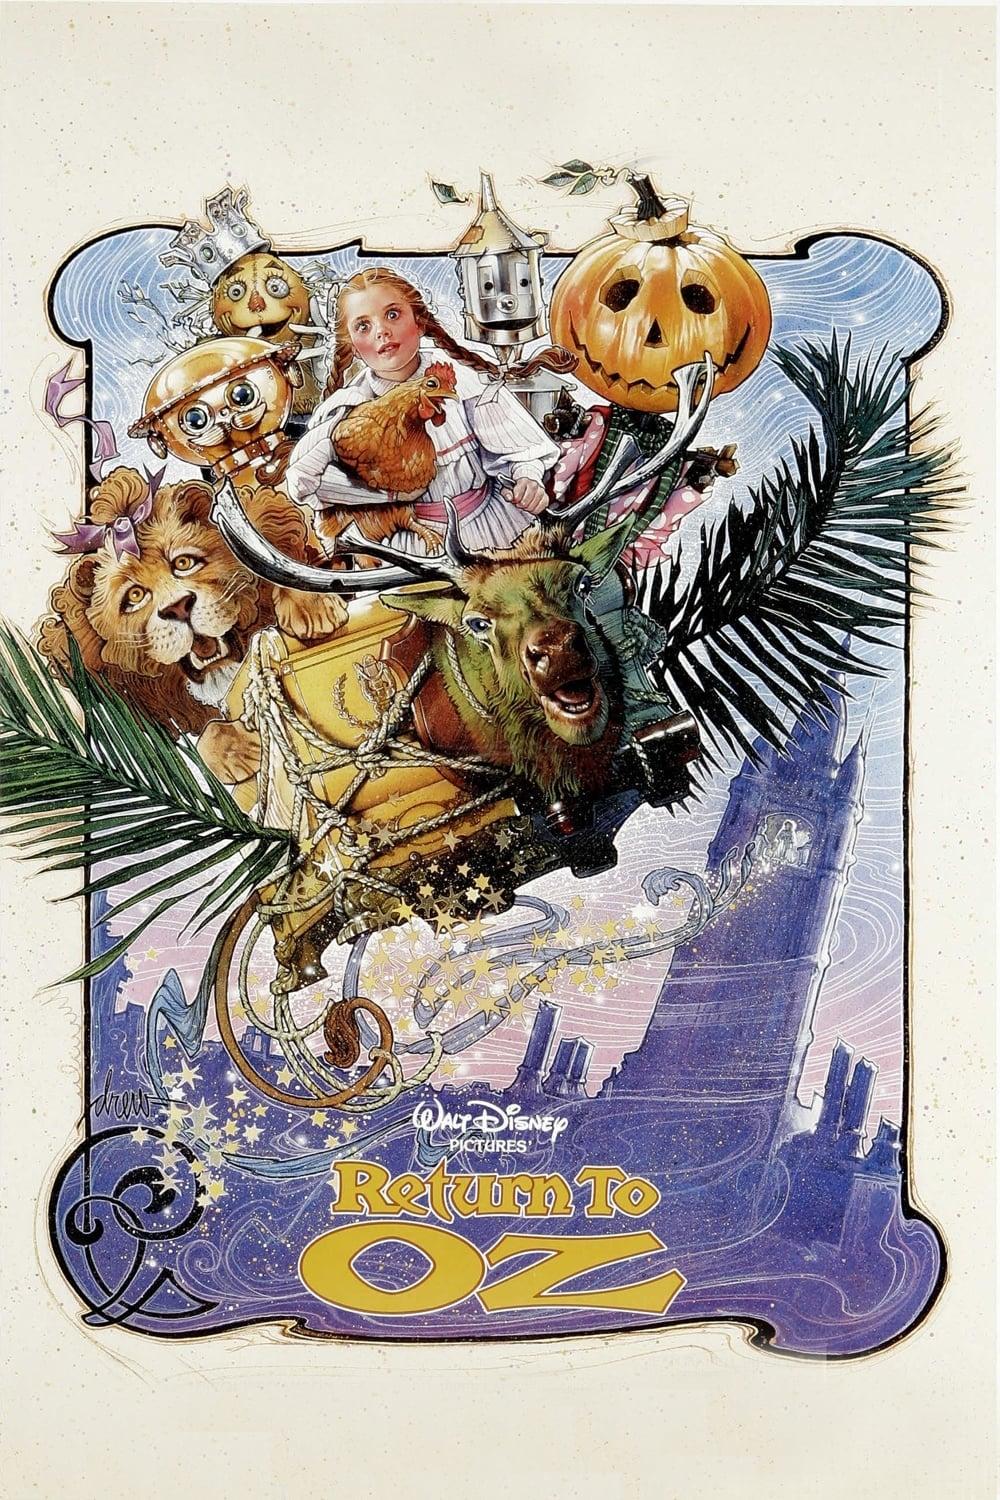 Return to Oz poster